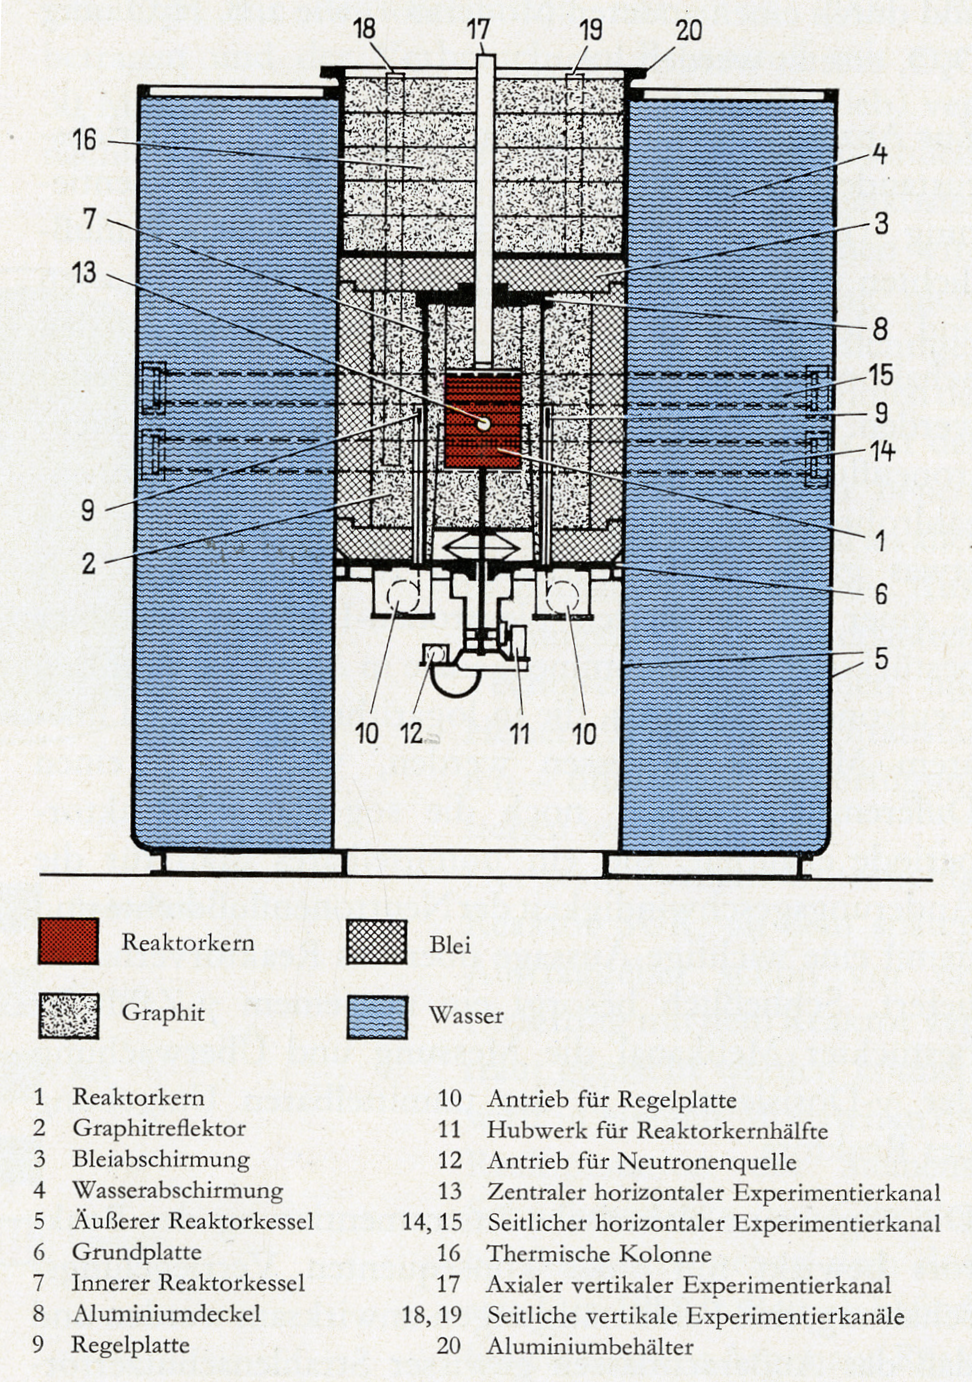 Figure 2: Longitudinal section through the Siemens teaching reactor. Source: Siemens Historical Institute.